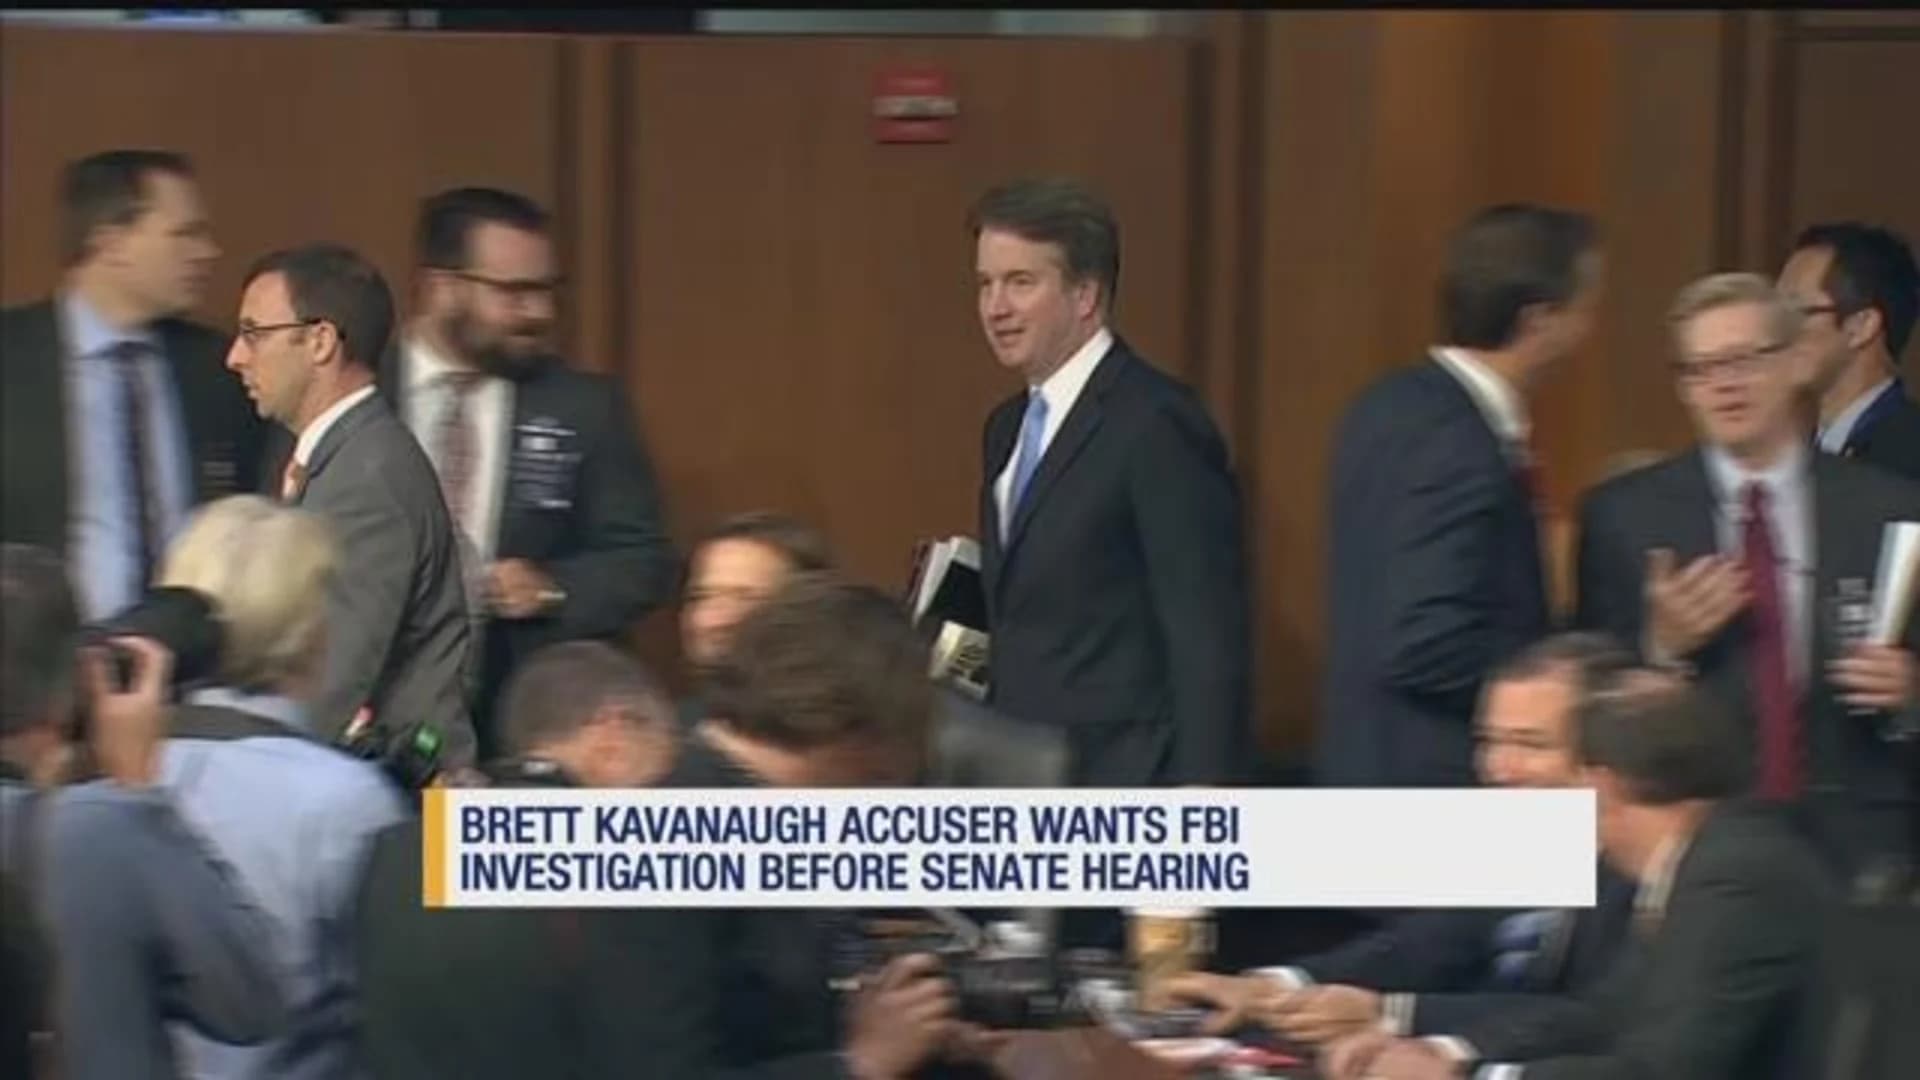 Trump says we'll make decision if Kavanaugh accuser credible